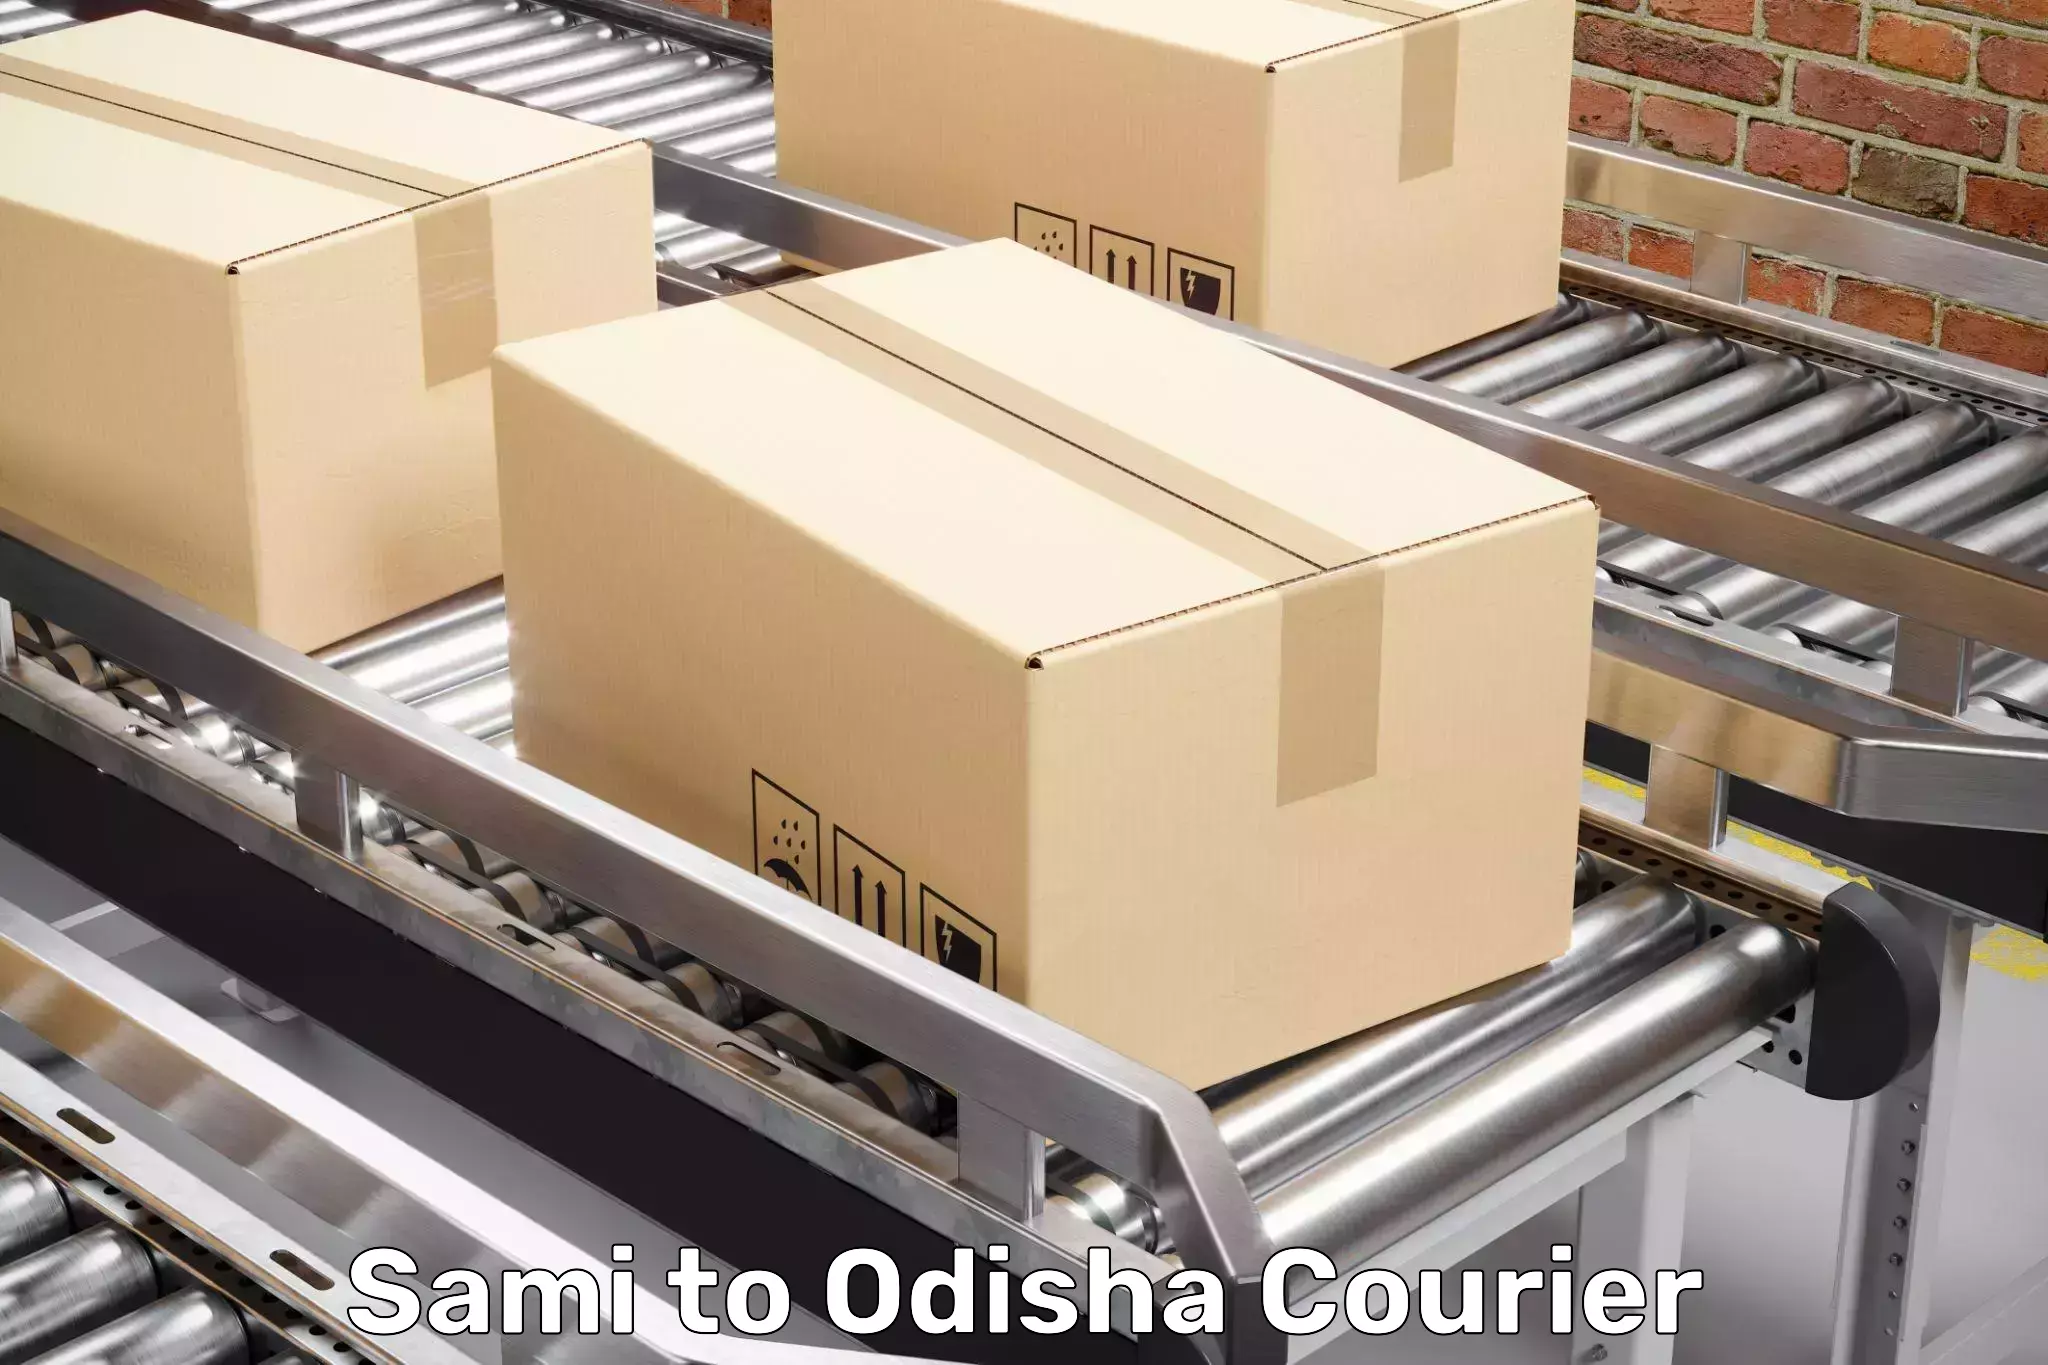 Quality moving company Sami to Ukhunda